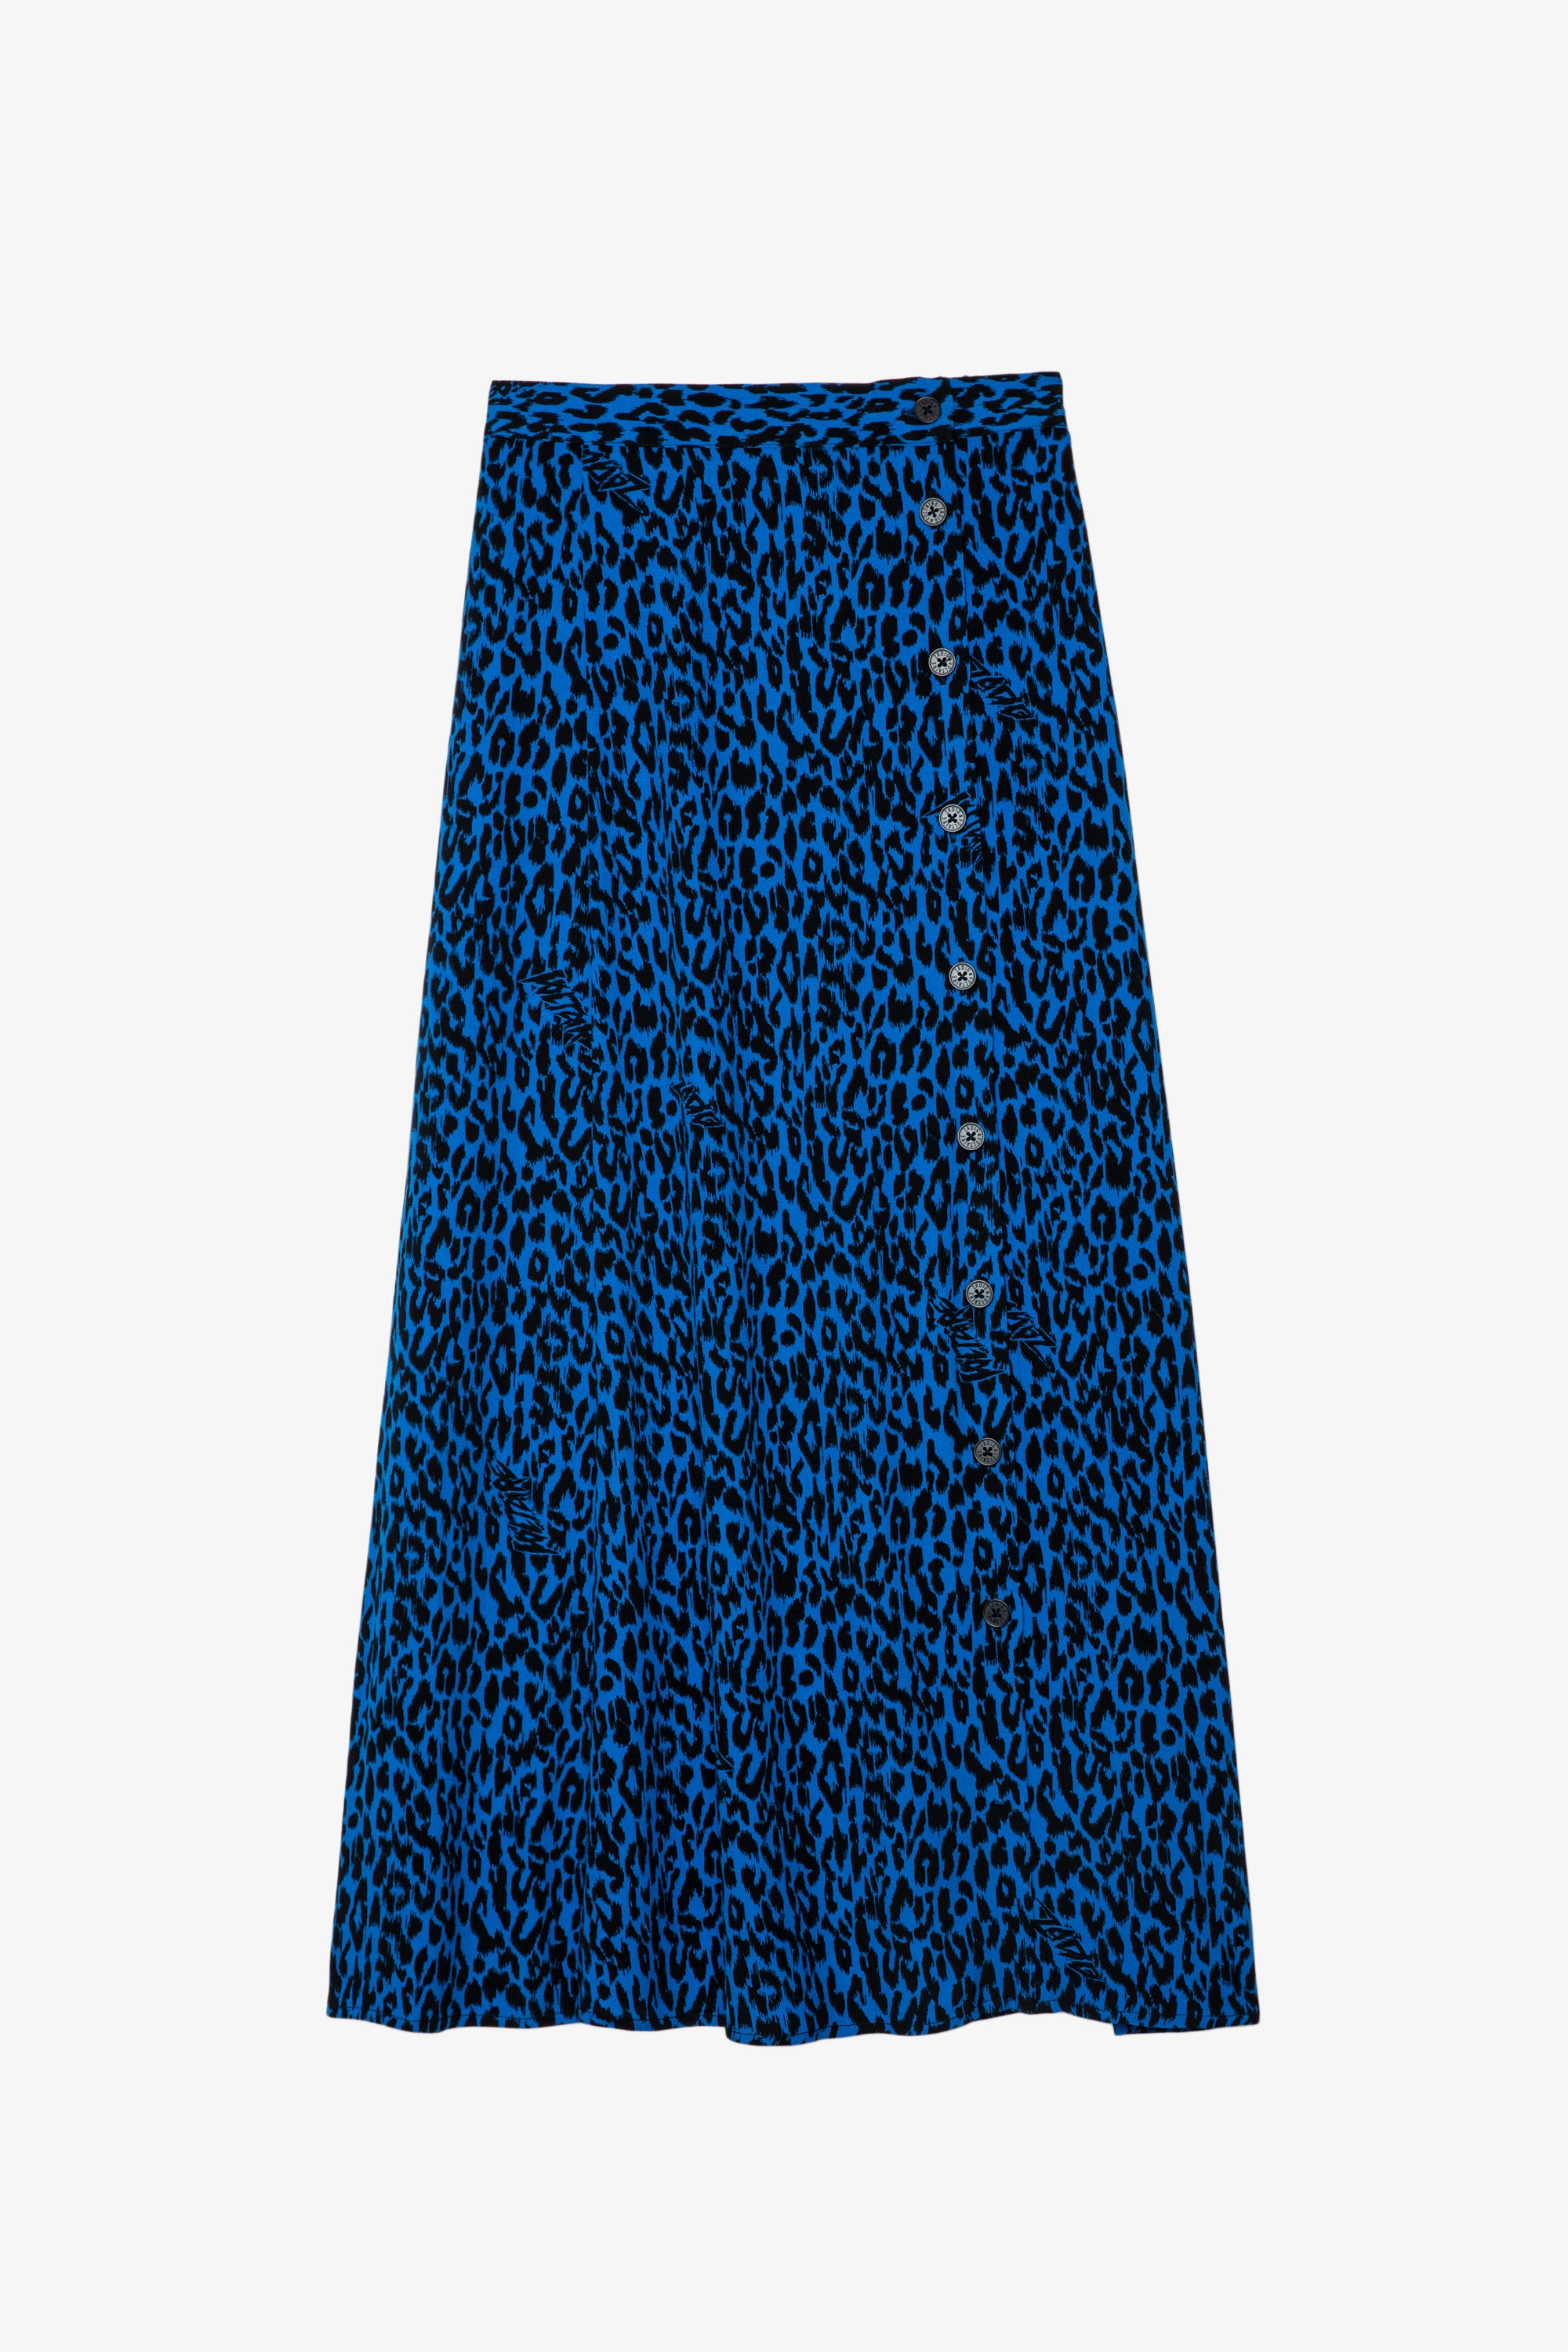 Rock June Langer blauer Damenrock mit Leopardenprint